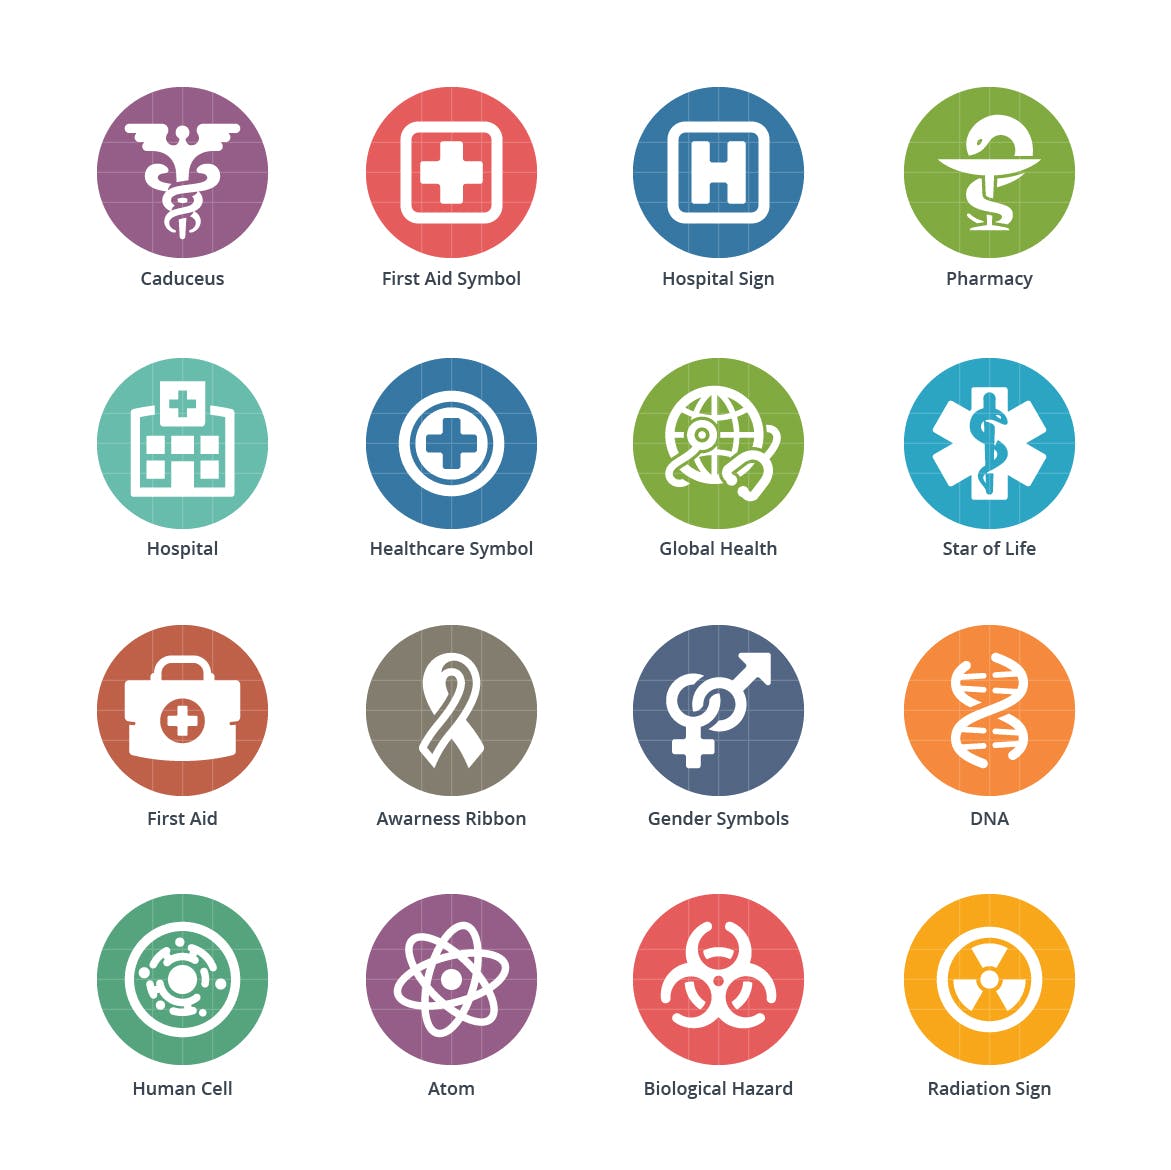 Colored系列-医疗保健主题矢量非凡图库精选图标集v1 Medical & Health Care Icons Set 1 – Colored Series插图(2)